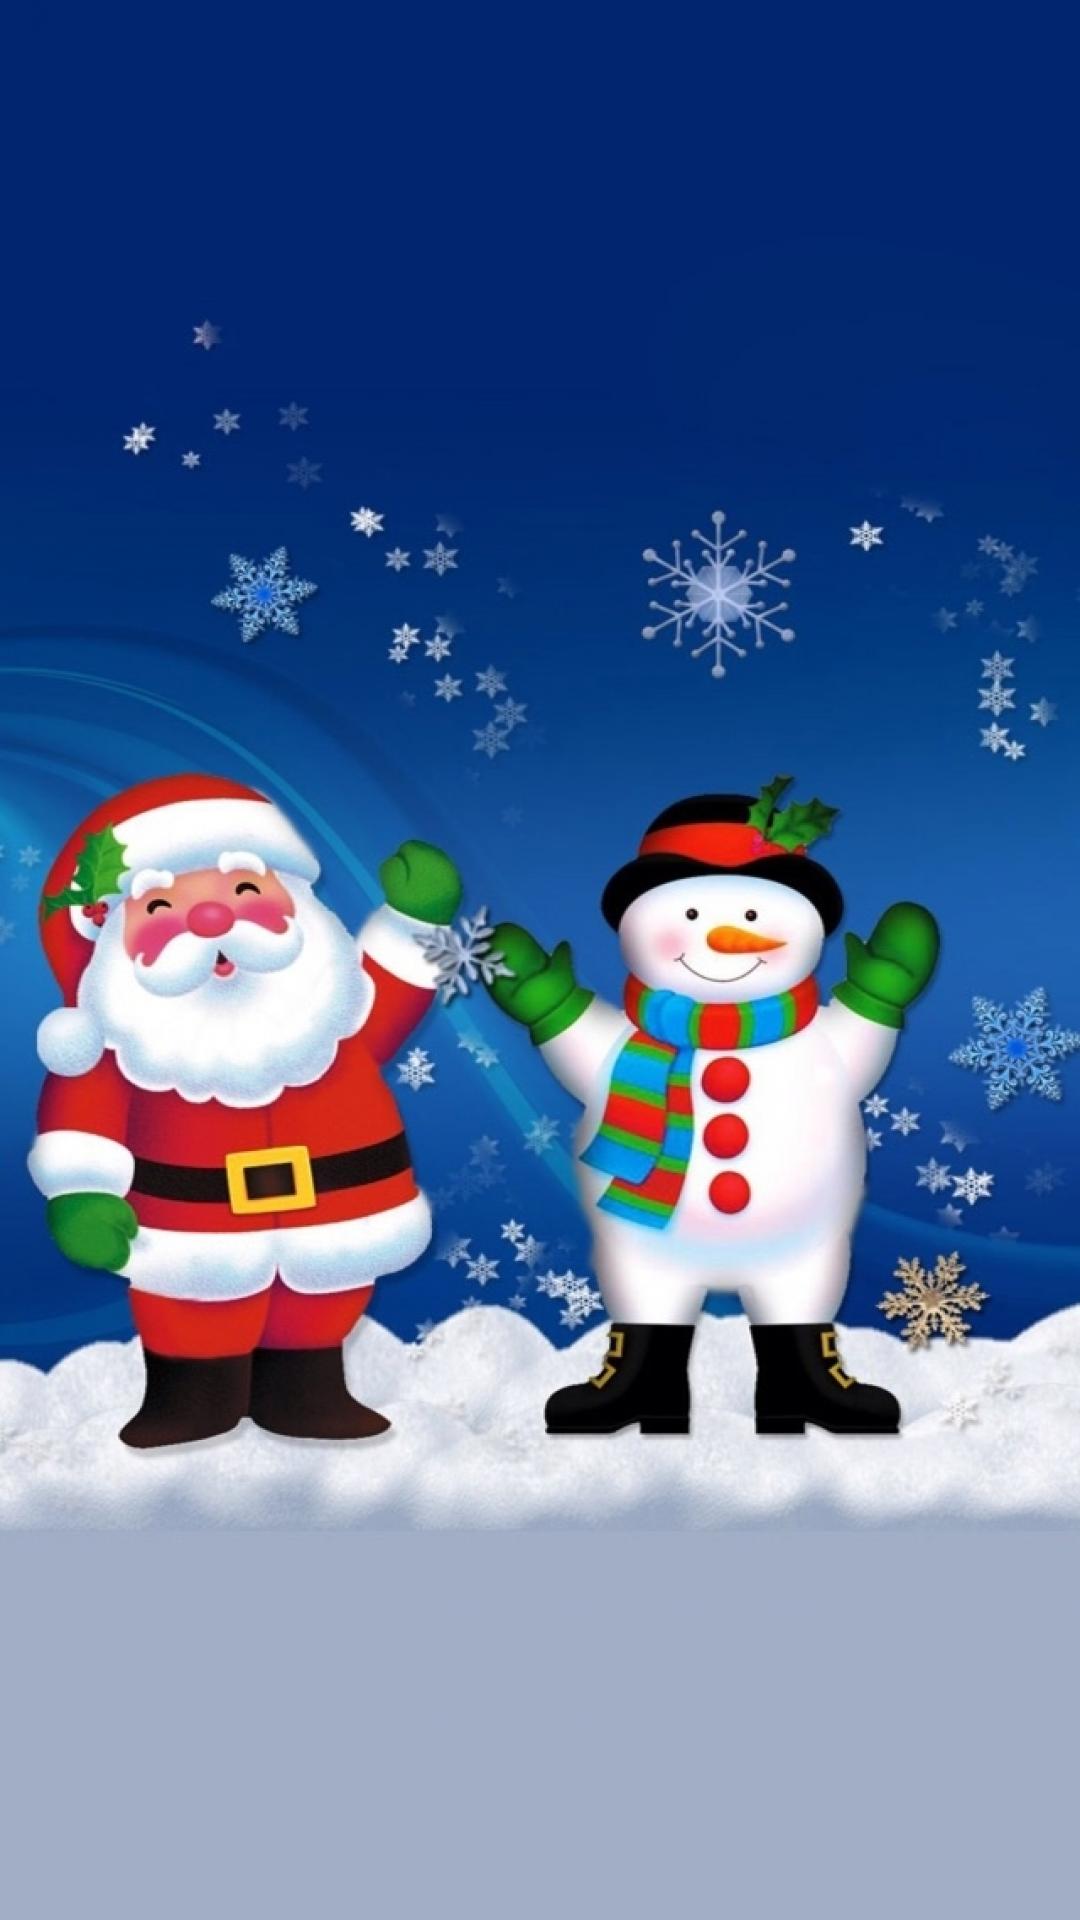 Merry Christmas Santa Clause - 1080x1920 Wallpaper 